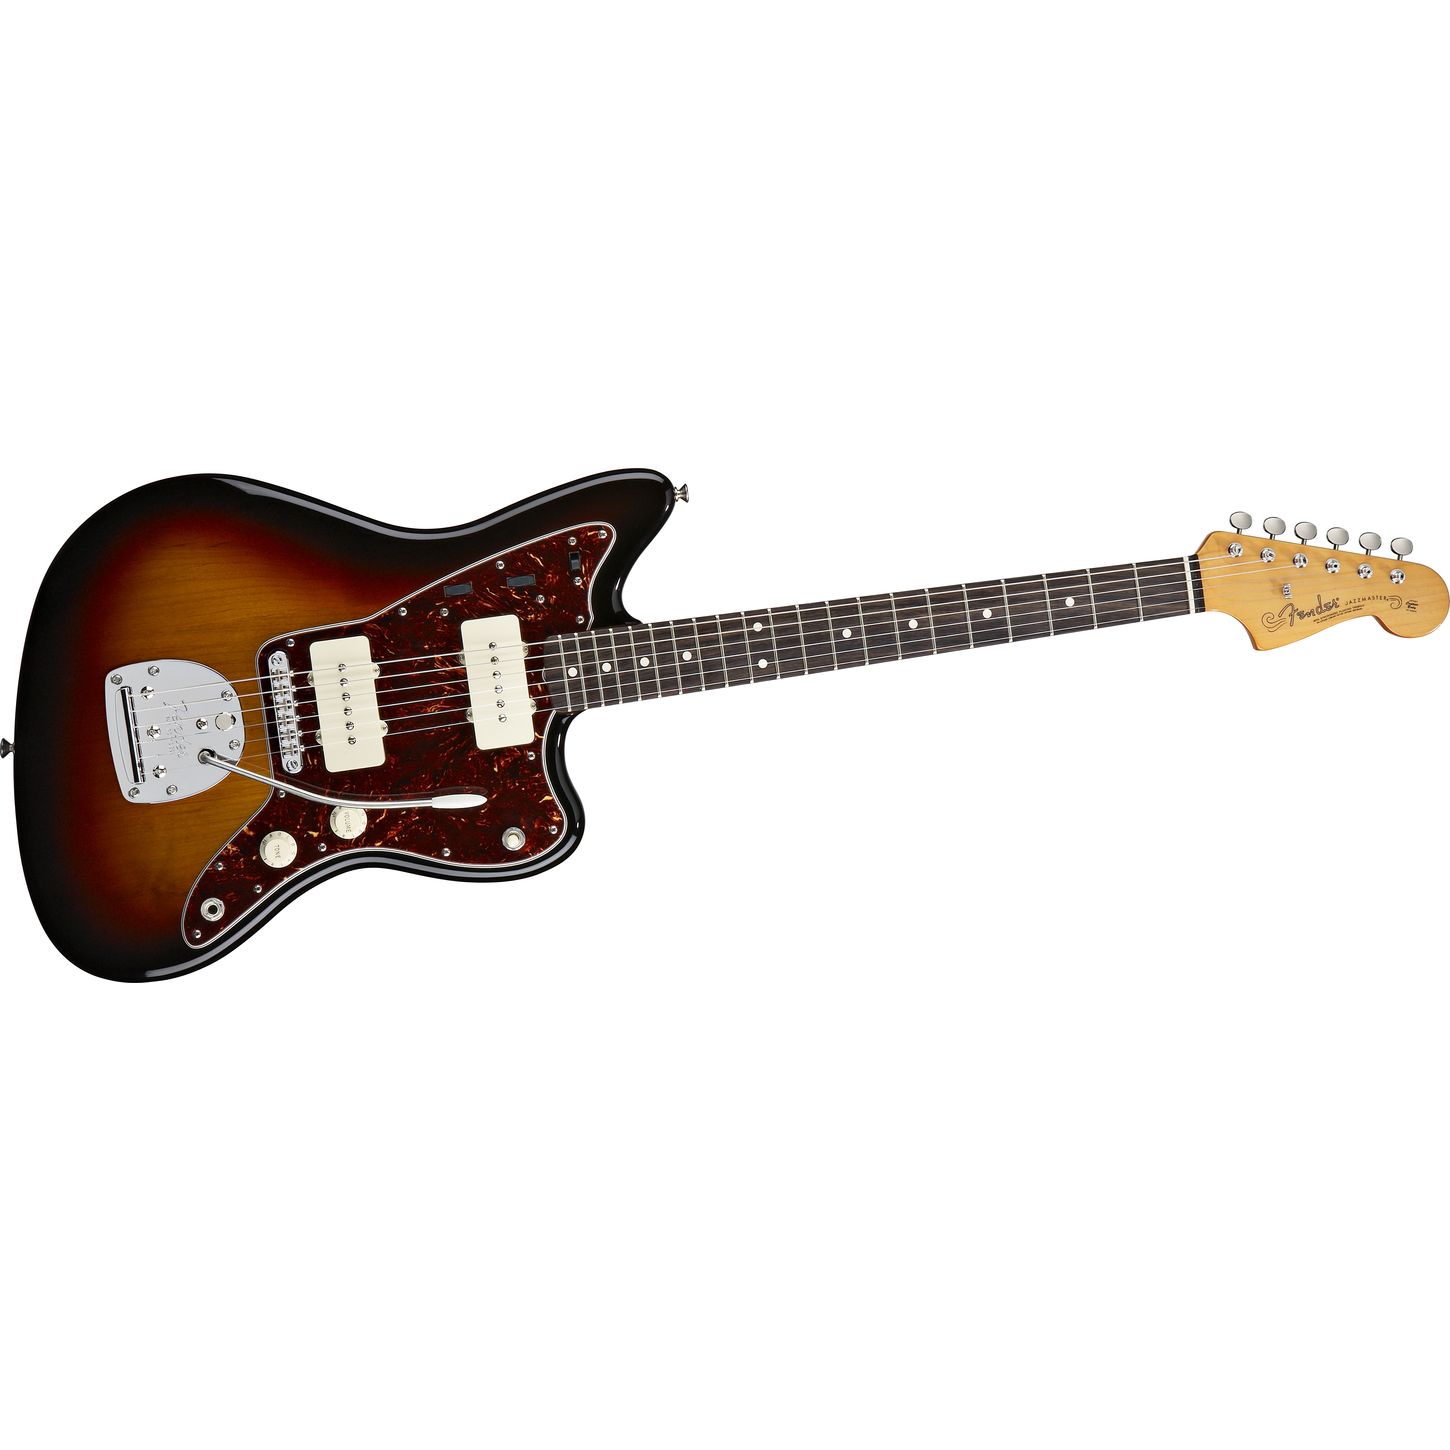 Fender Jazzmaster Classic Player Used